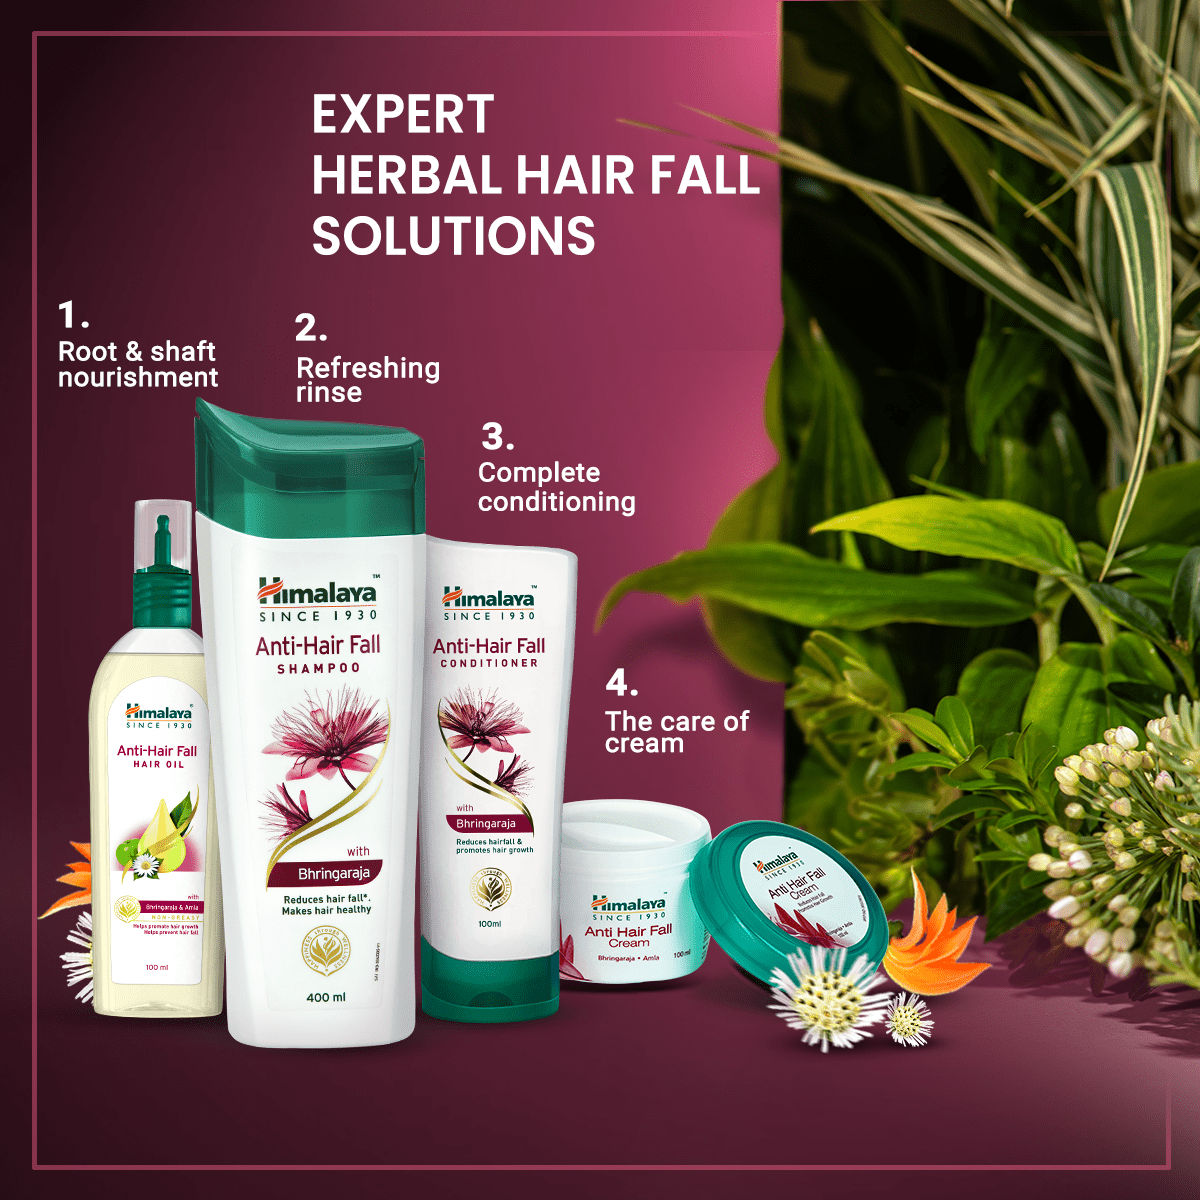 Buy Himalaya Anti Hair Loss Cream Online at Best Price in 2021